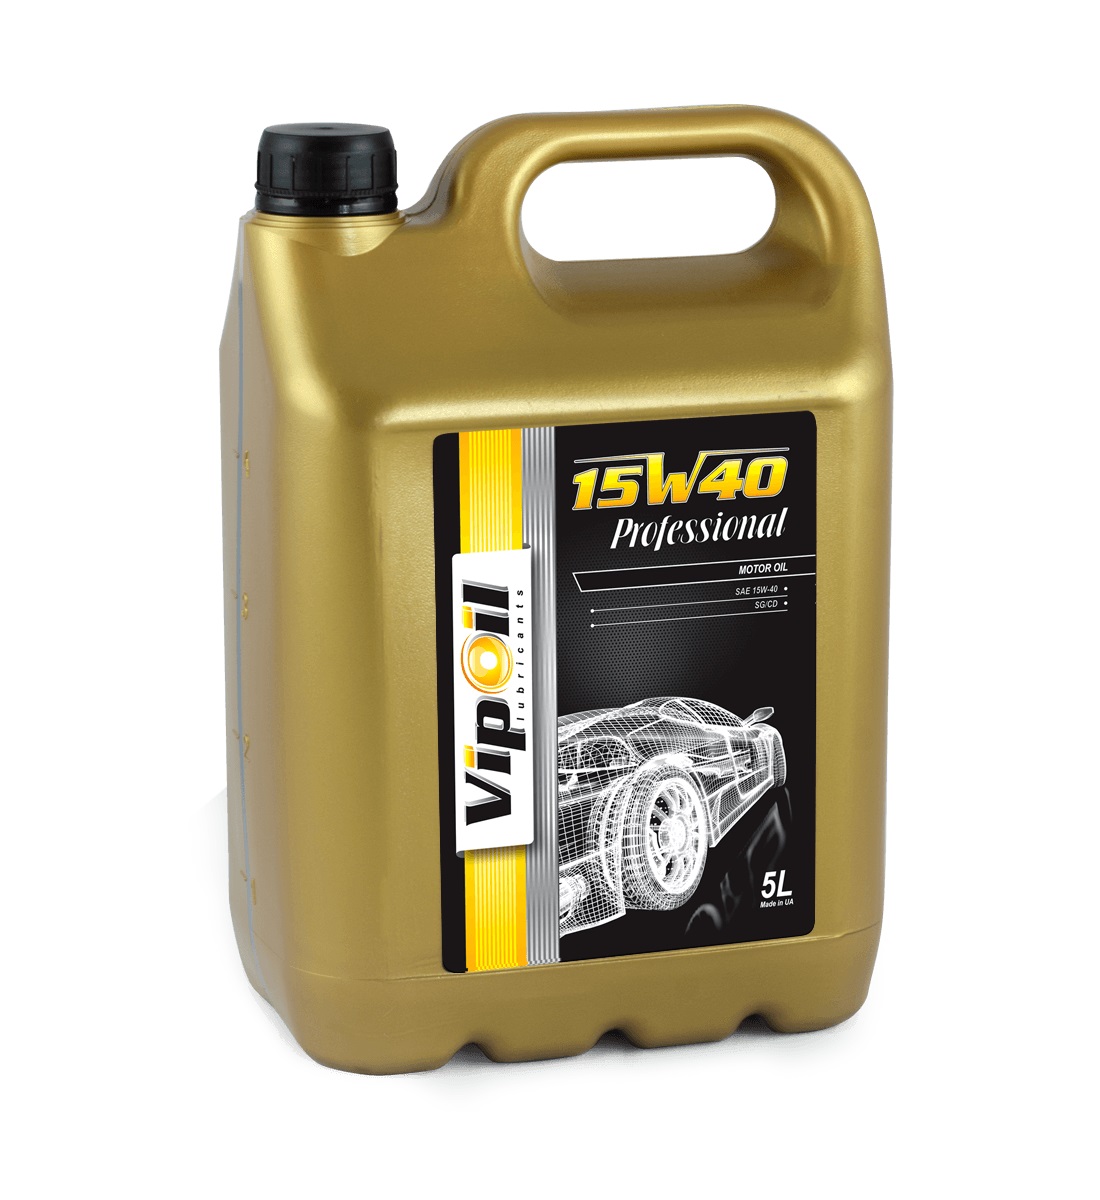 VipOil 0162844 Motor oil Vipoil Professional 15W-40, 5 l 0162844